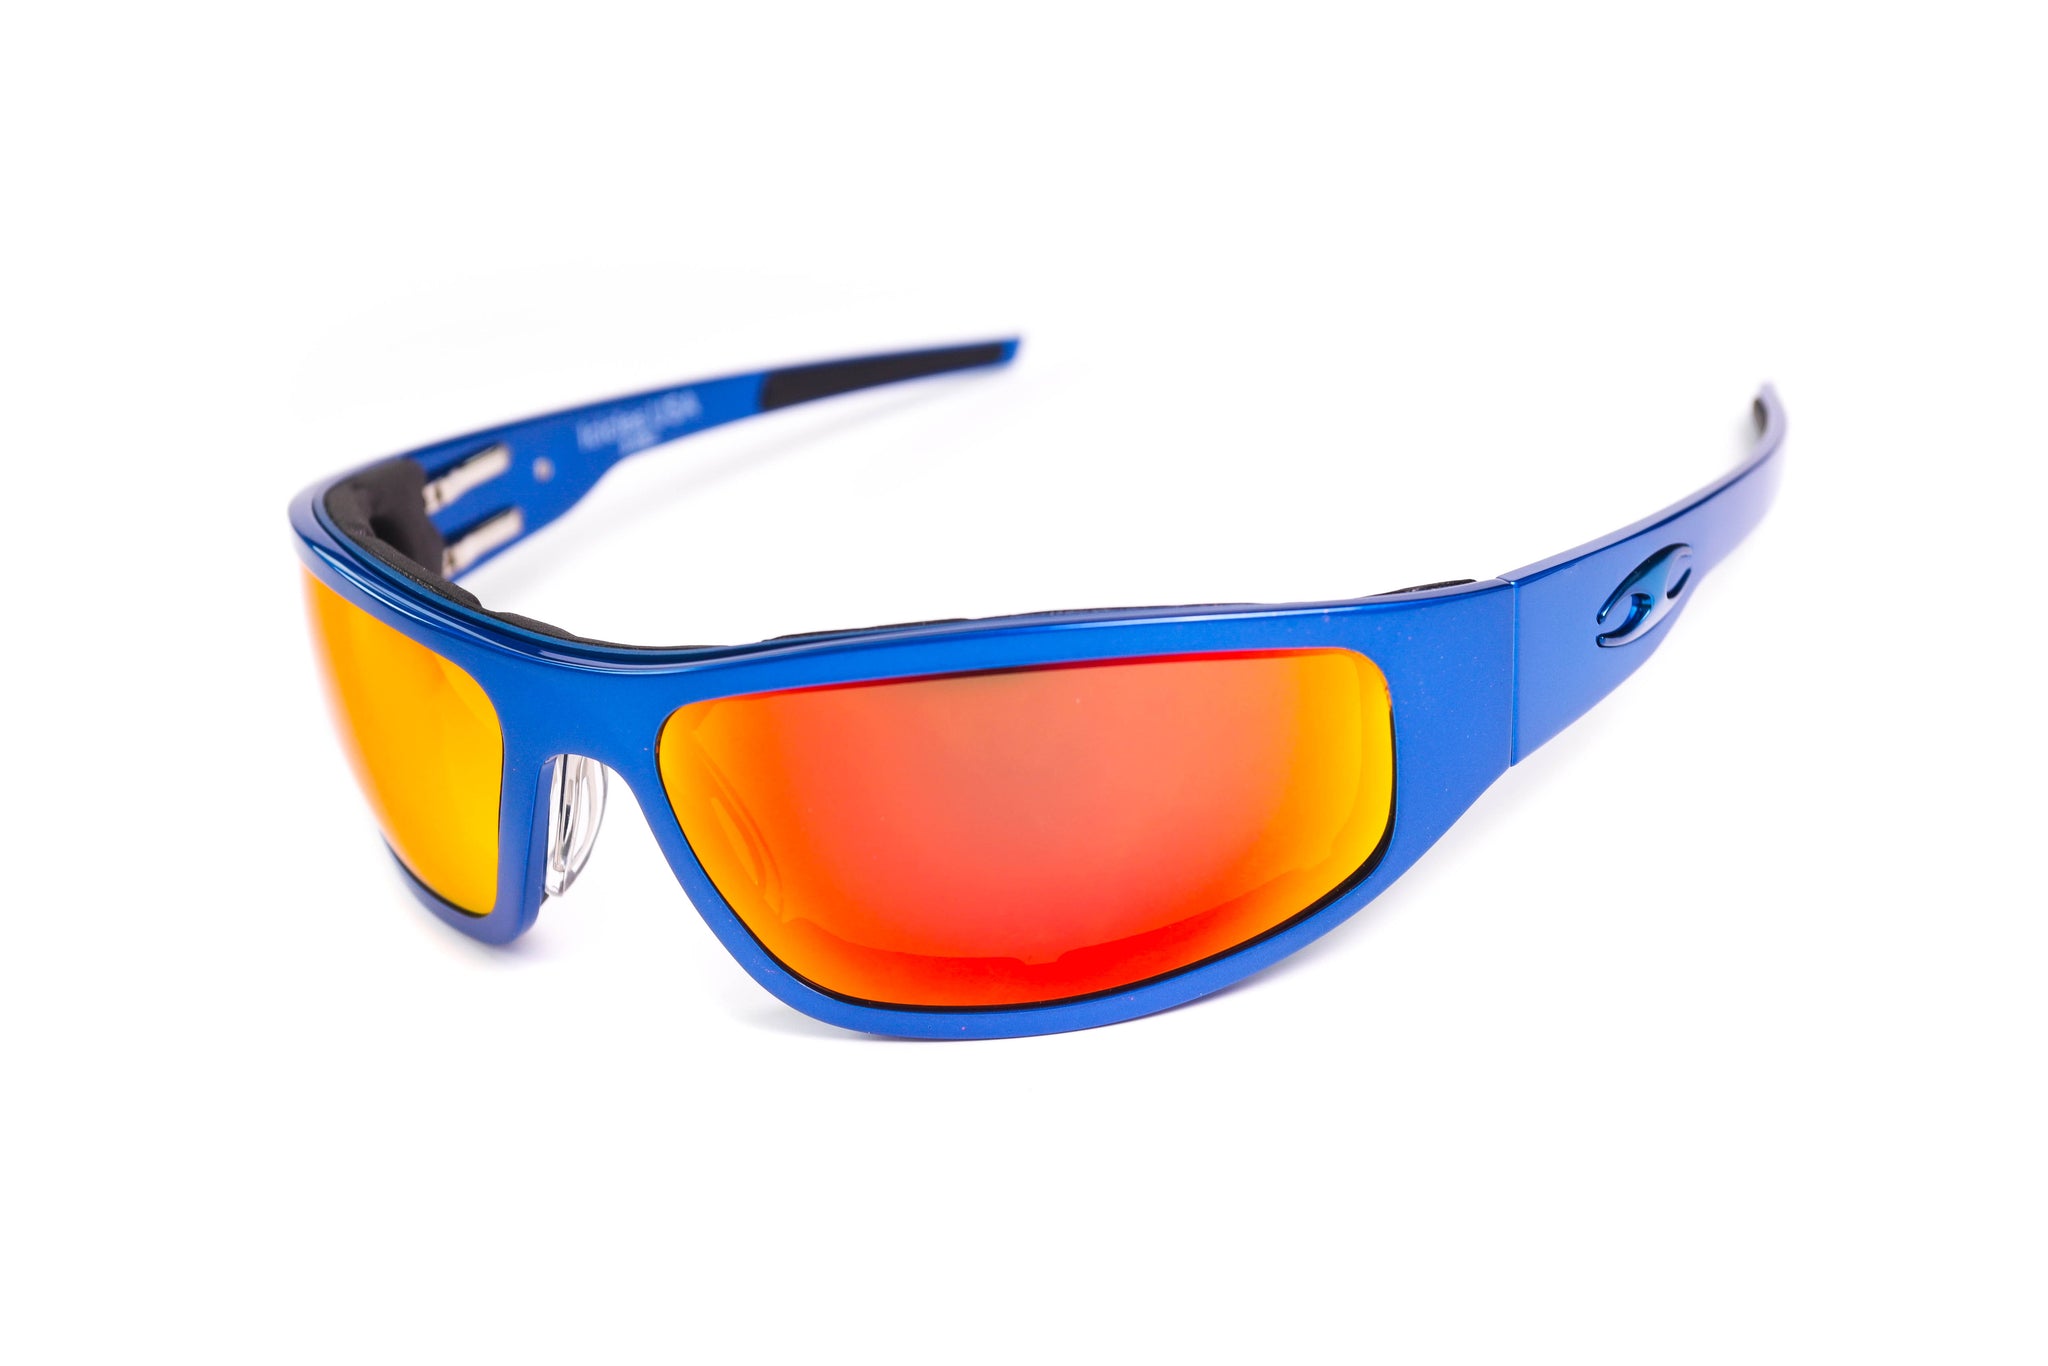 Salice 011 Sport Sunglasses Orange with Blue lens